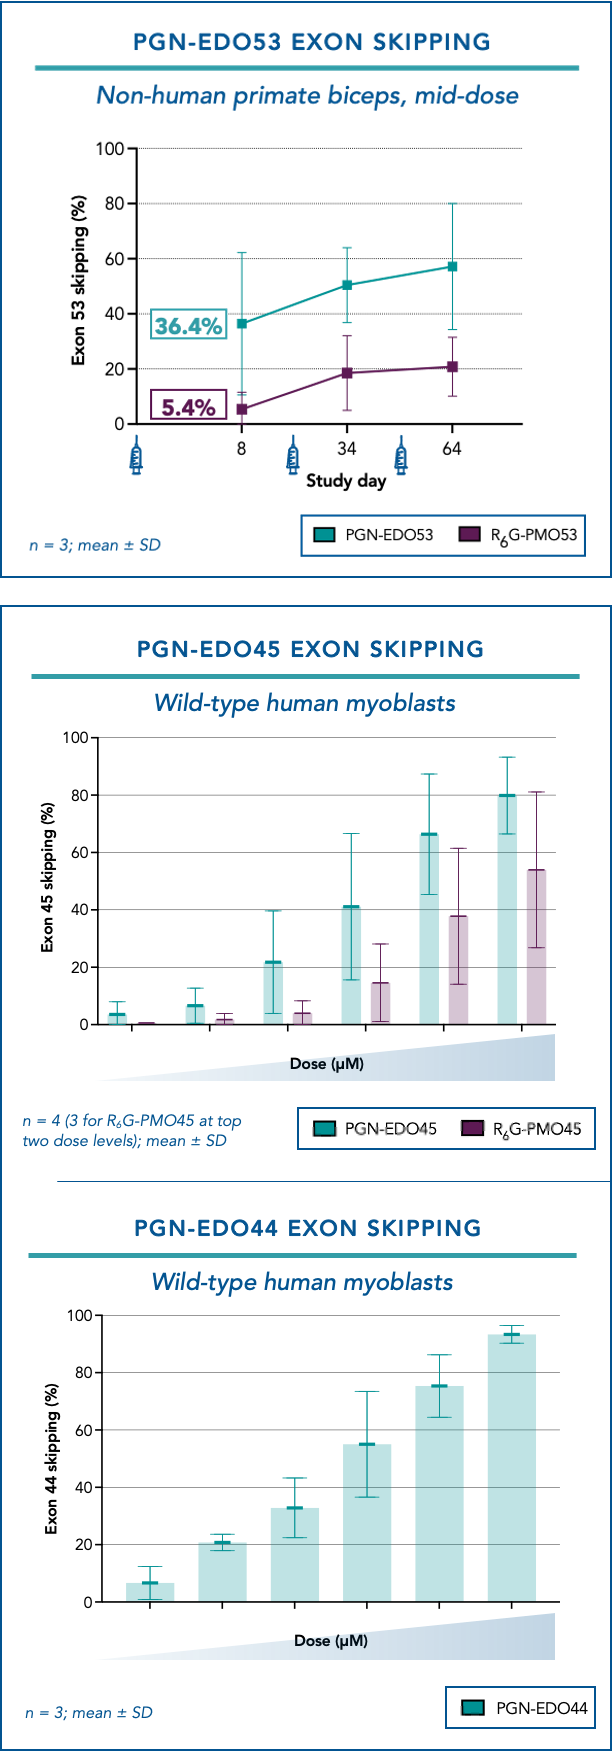 PepGen Announces Positive Preclinical Data for PGN-EDO53, PGN-EDO45 and PGN-EDO44, Three Novel Duchenne Muscular Dystrophy Candidates